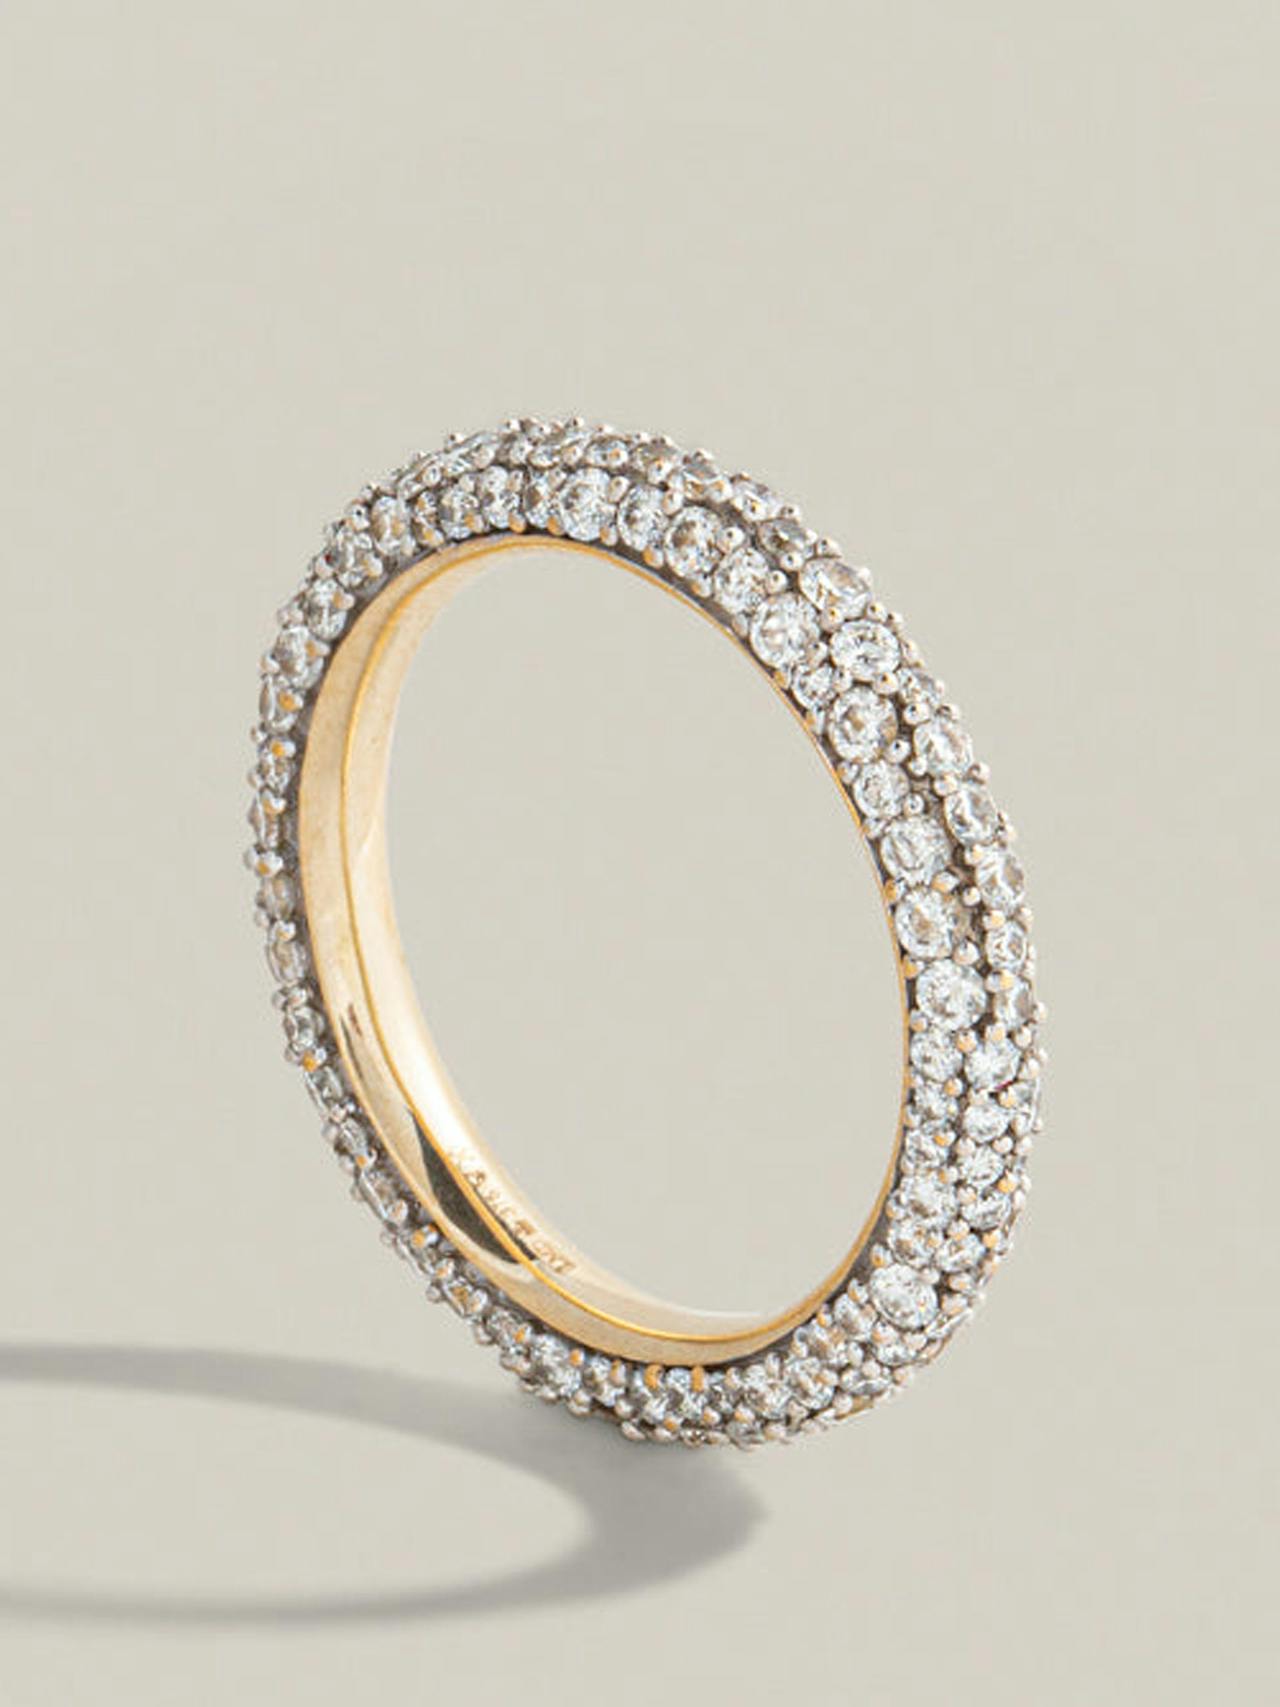 14kt gold and pavé diamond eternity ring